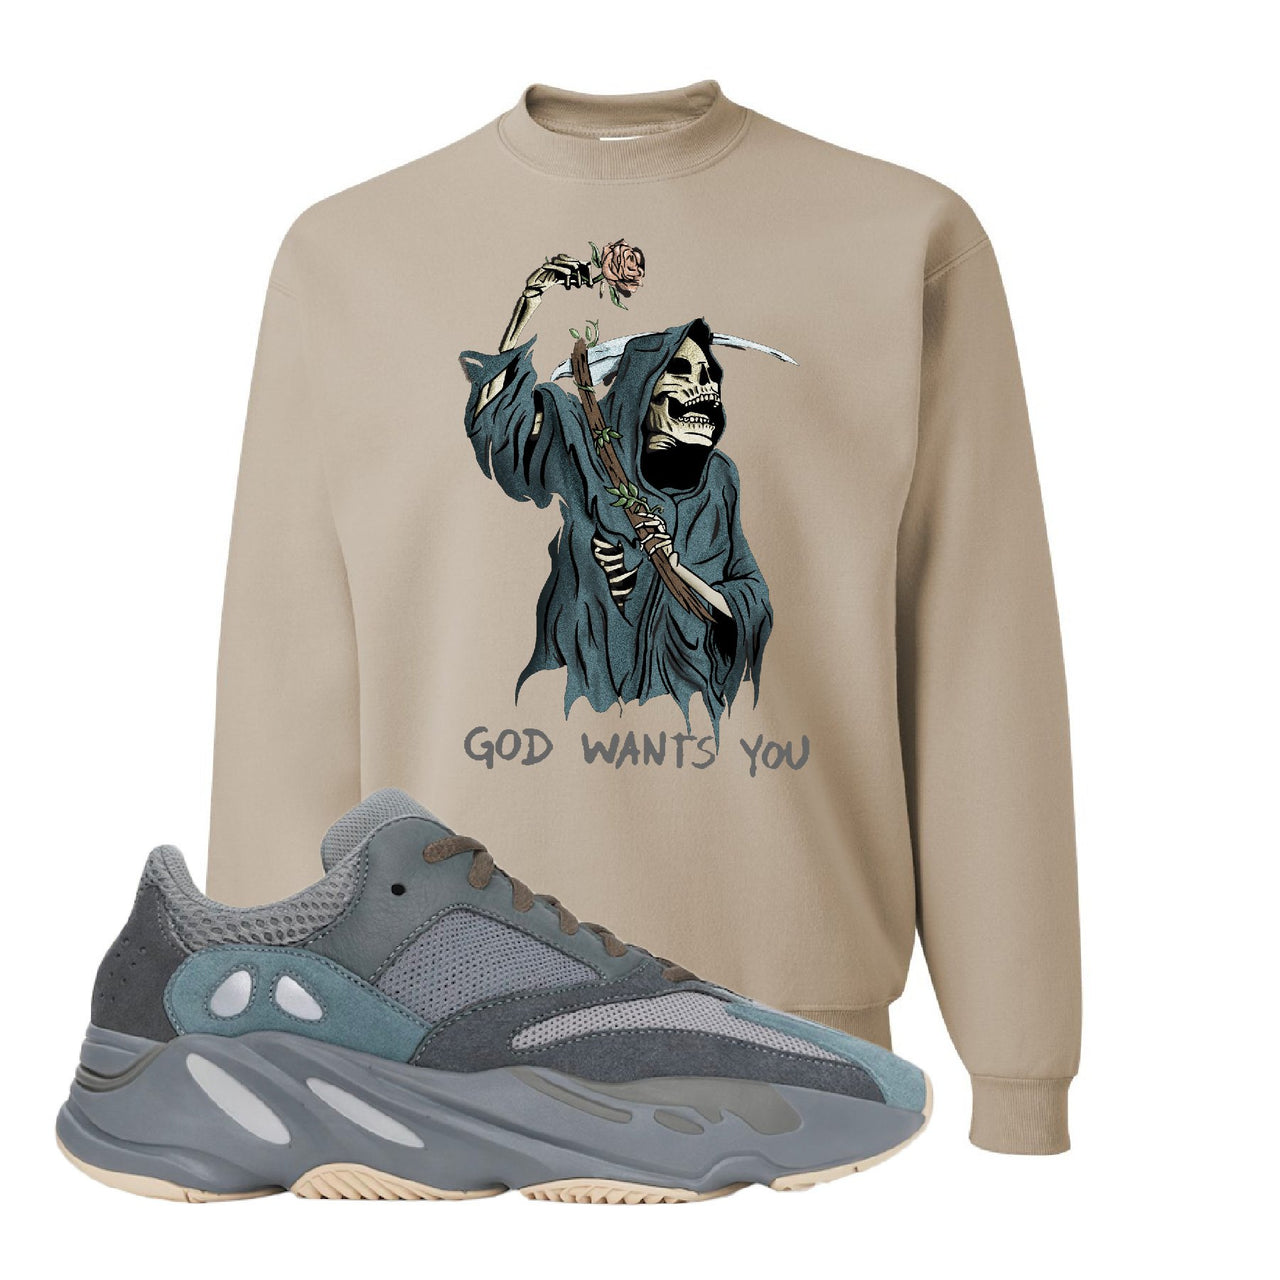 Yeezy Boost 700 Teal Blue God Wants You Reaper Sandstone Sneaker Hook Up Crewneck Sweatshirt